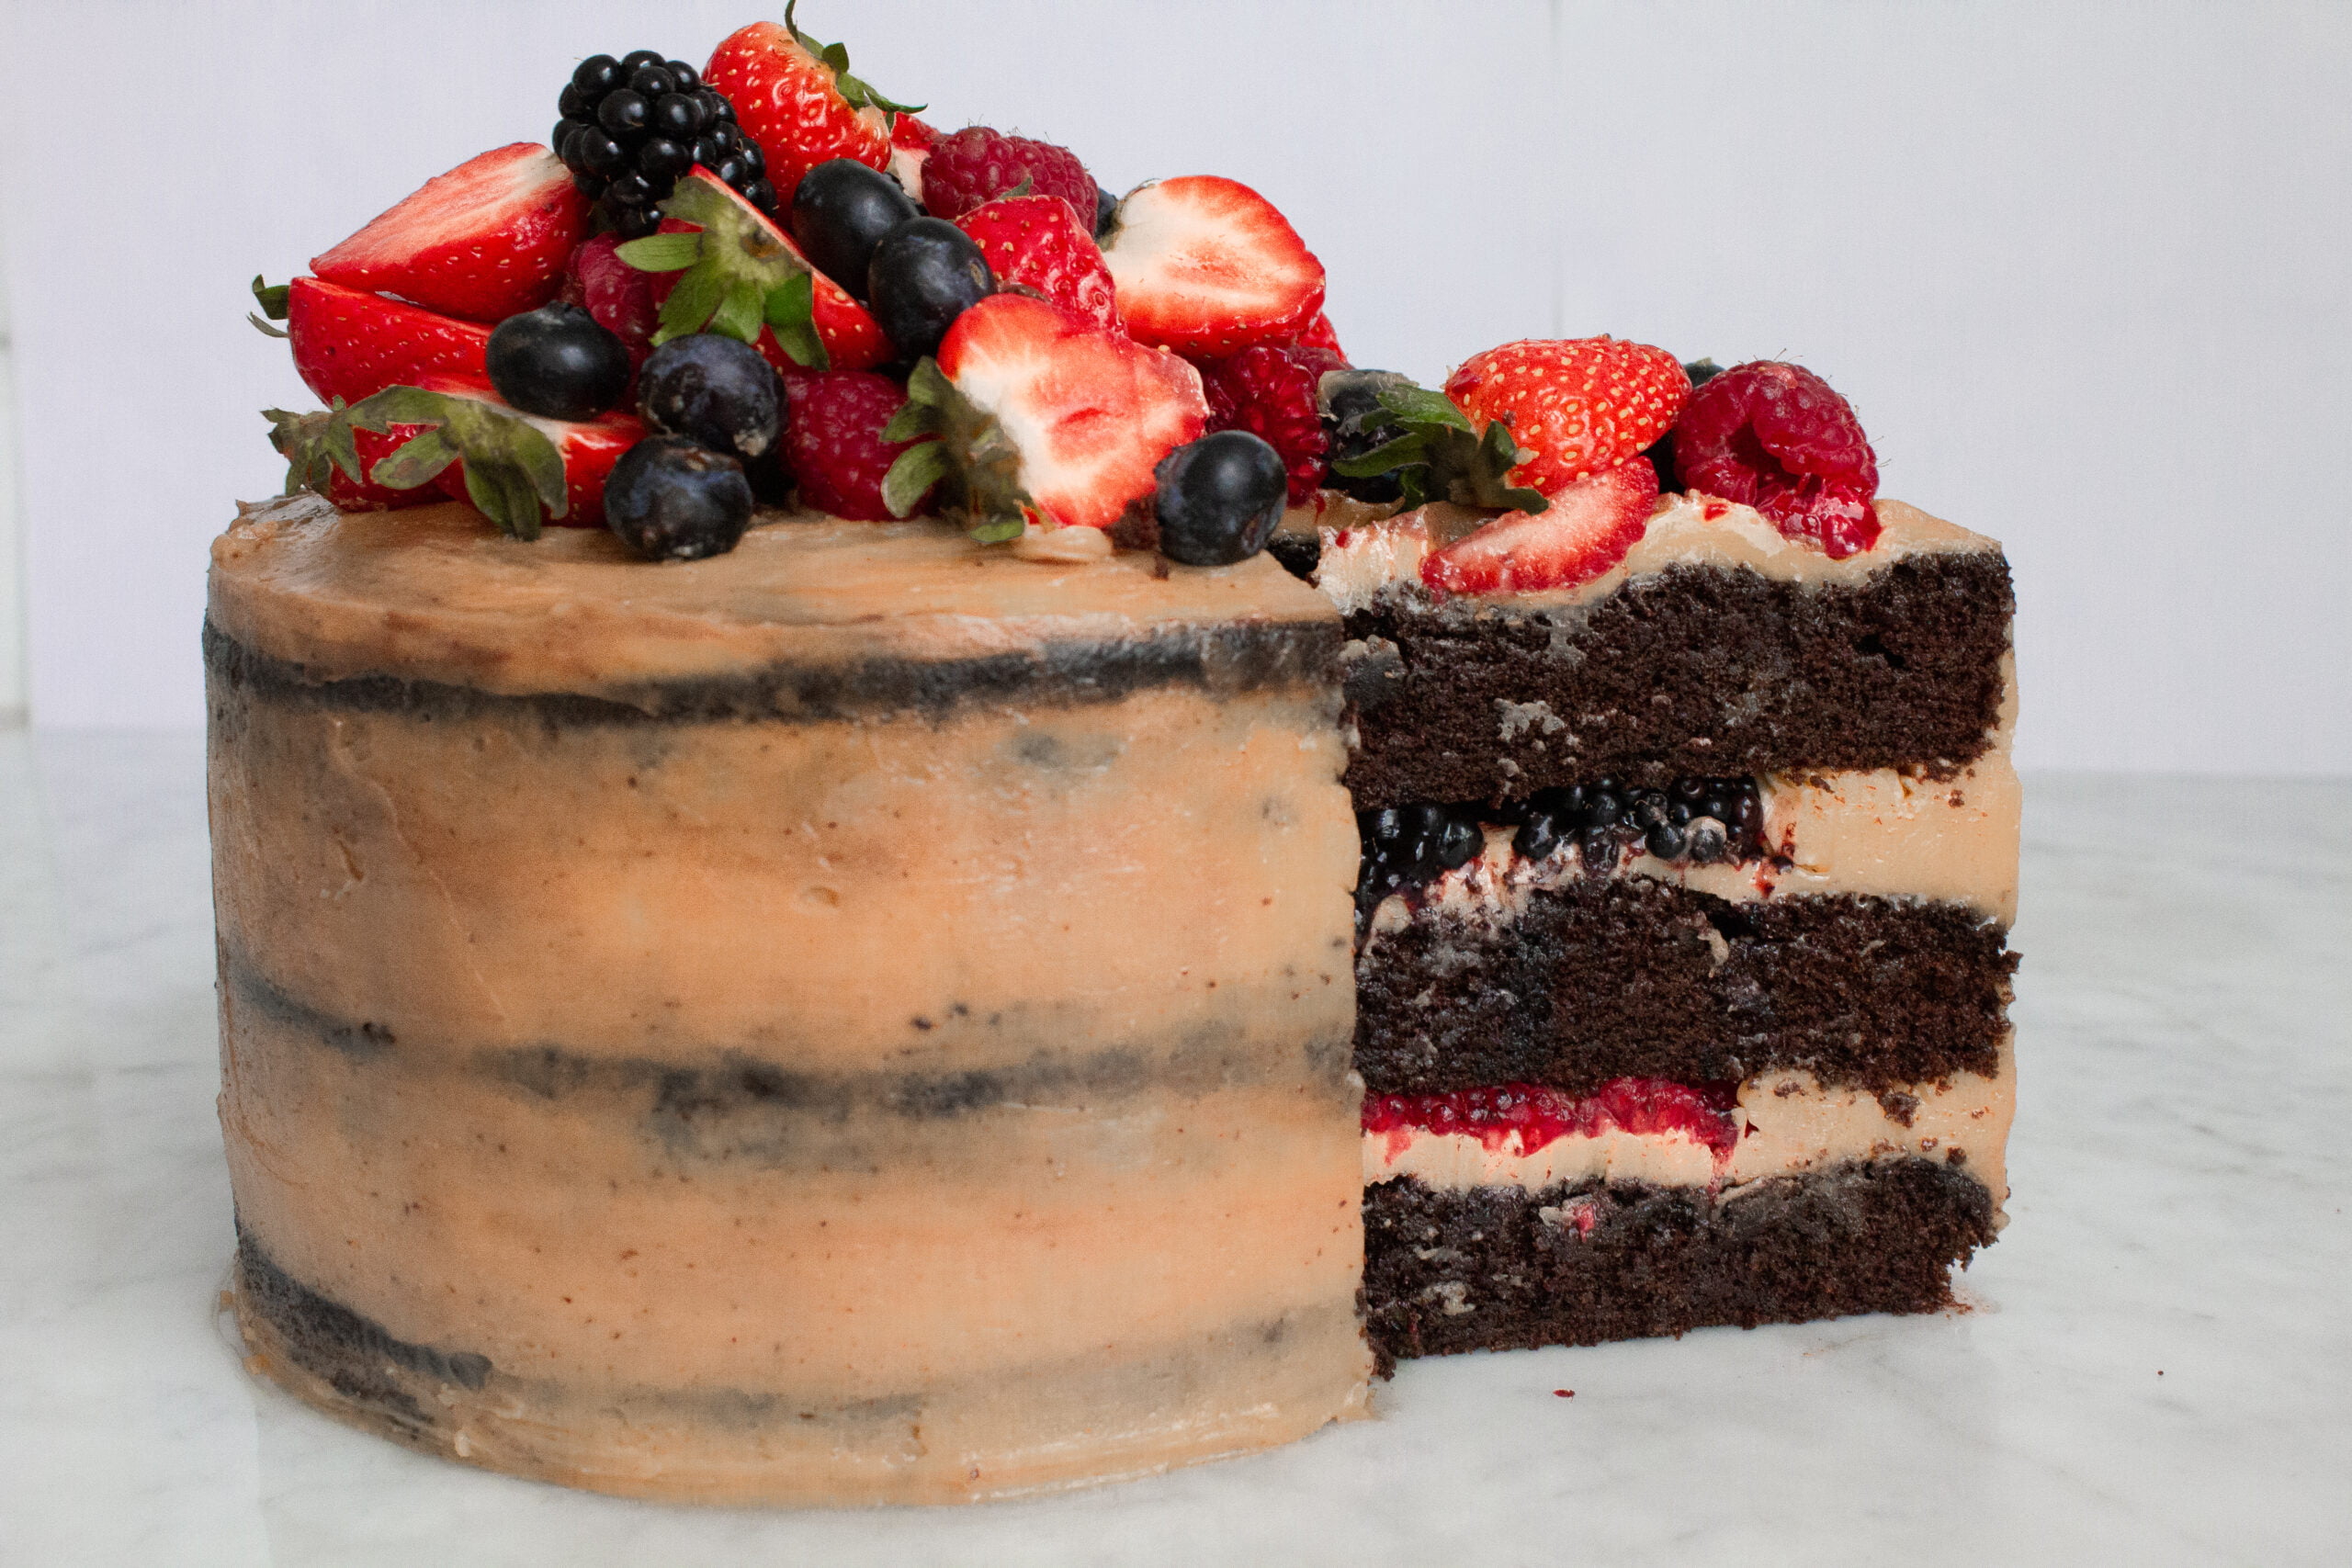 Dulce de leche layer cake with fresh berries